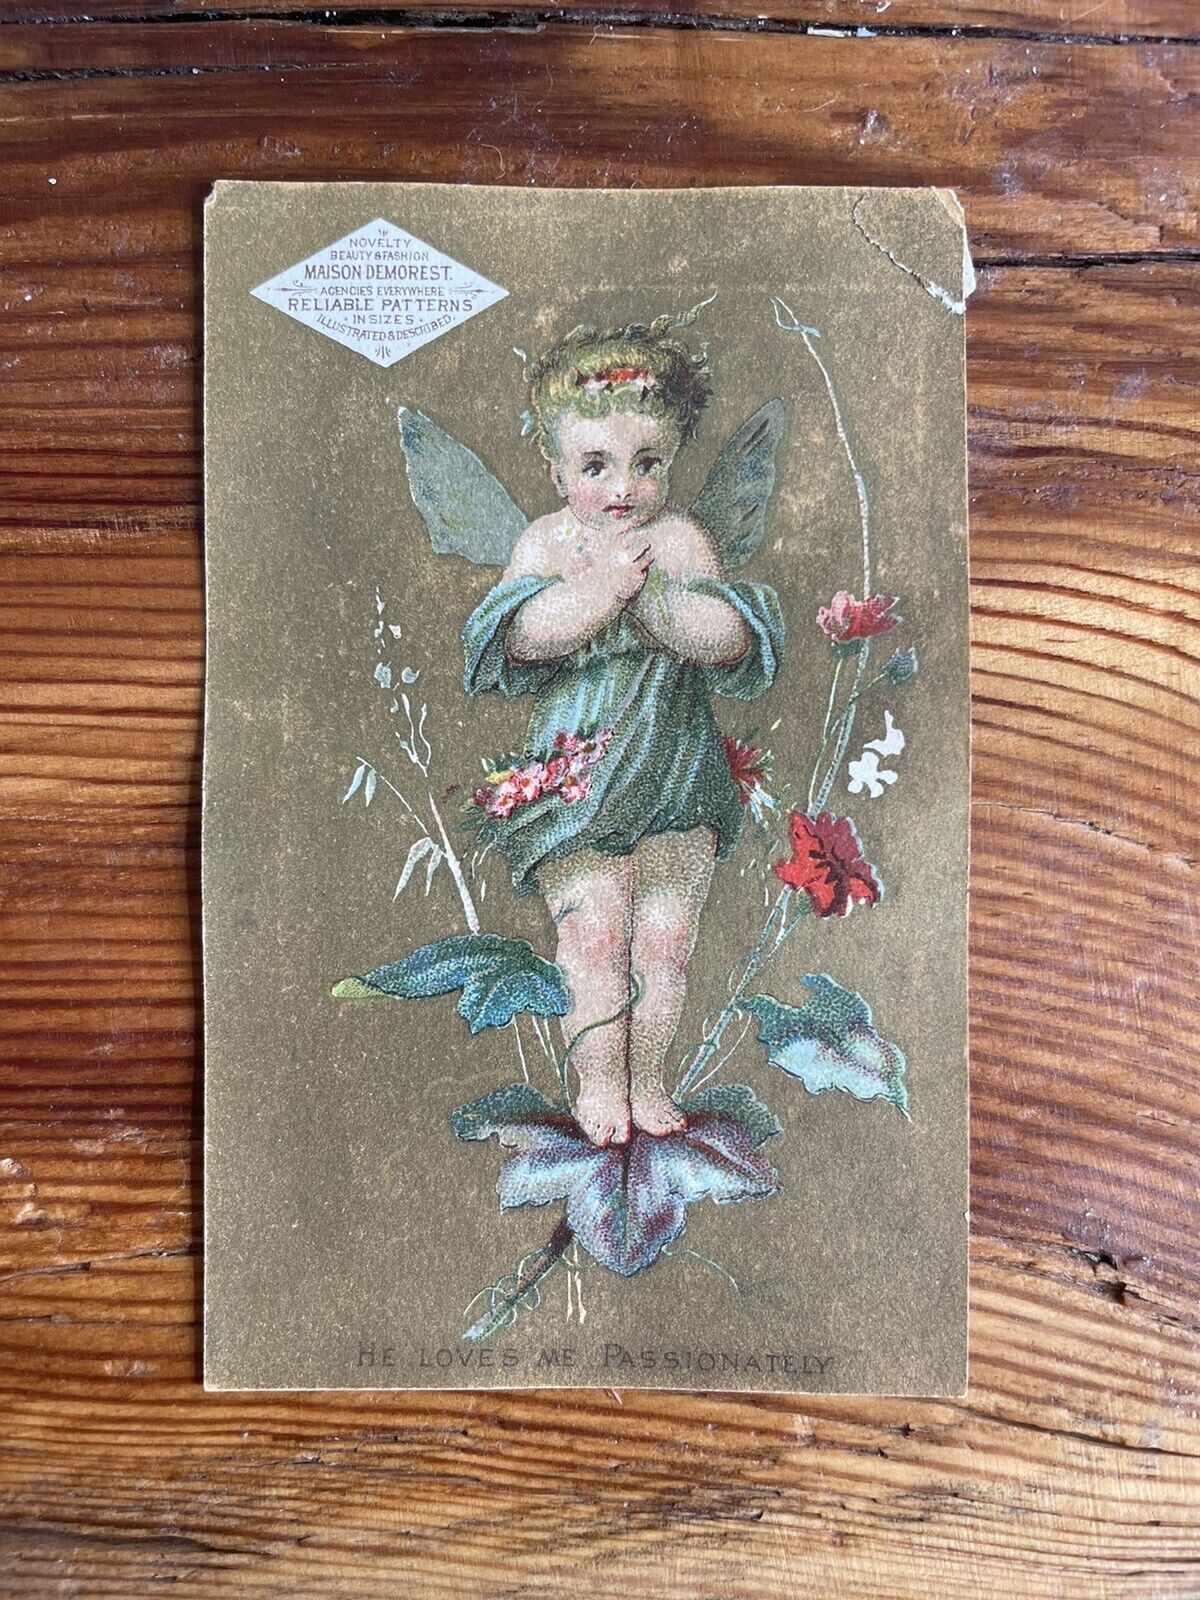 Demorest Emporium of Fashions - Antique 1880s Victorian Trade Card